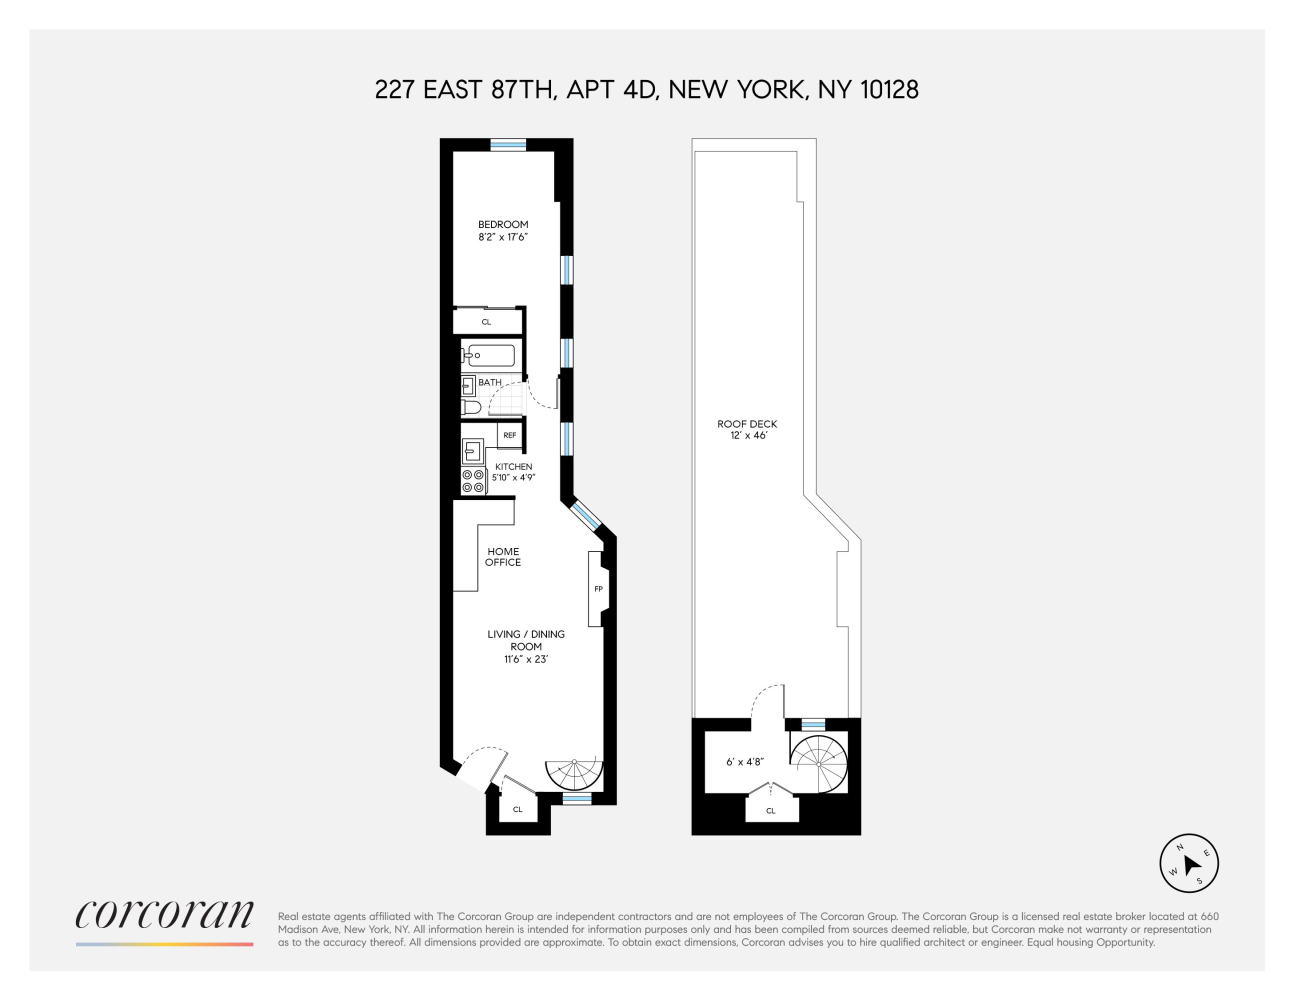 Floorplan for 227 East 87th Street, 4D